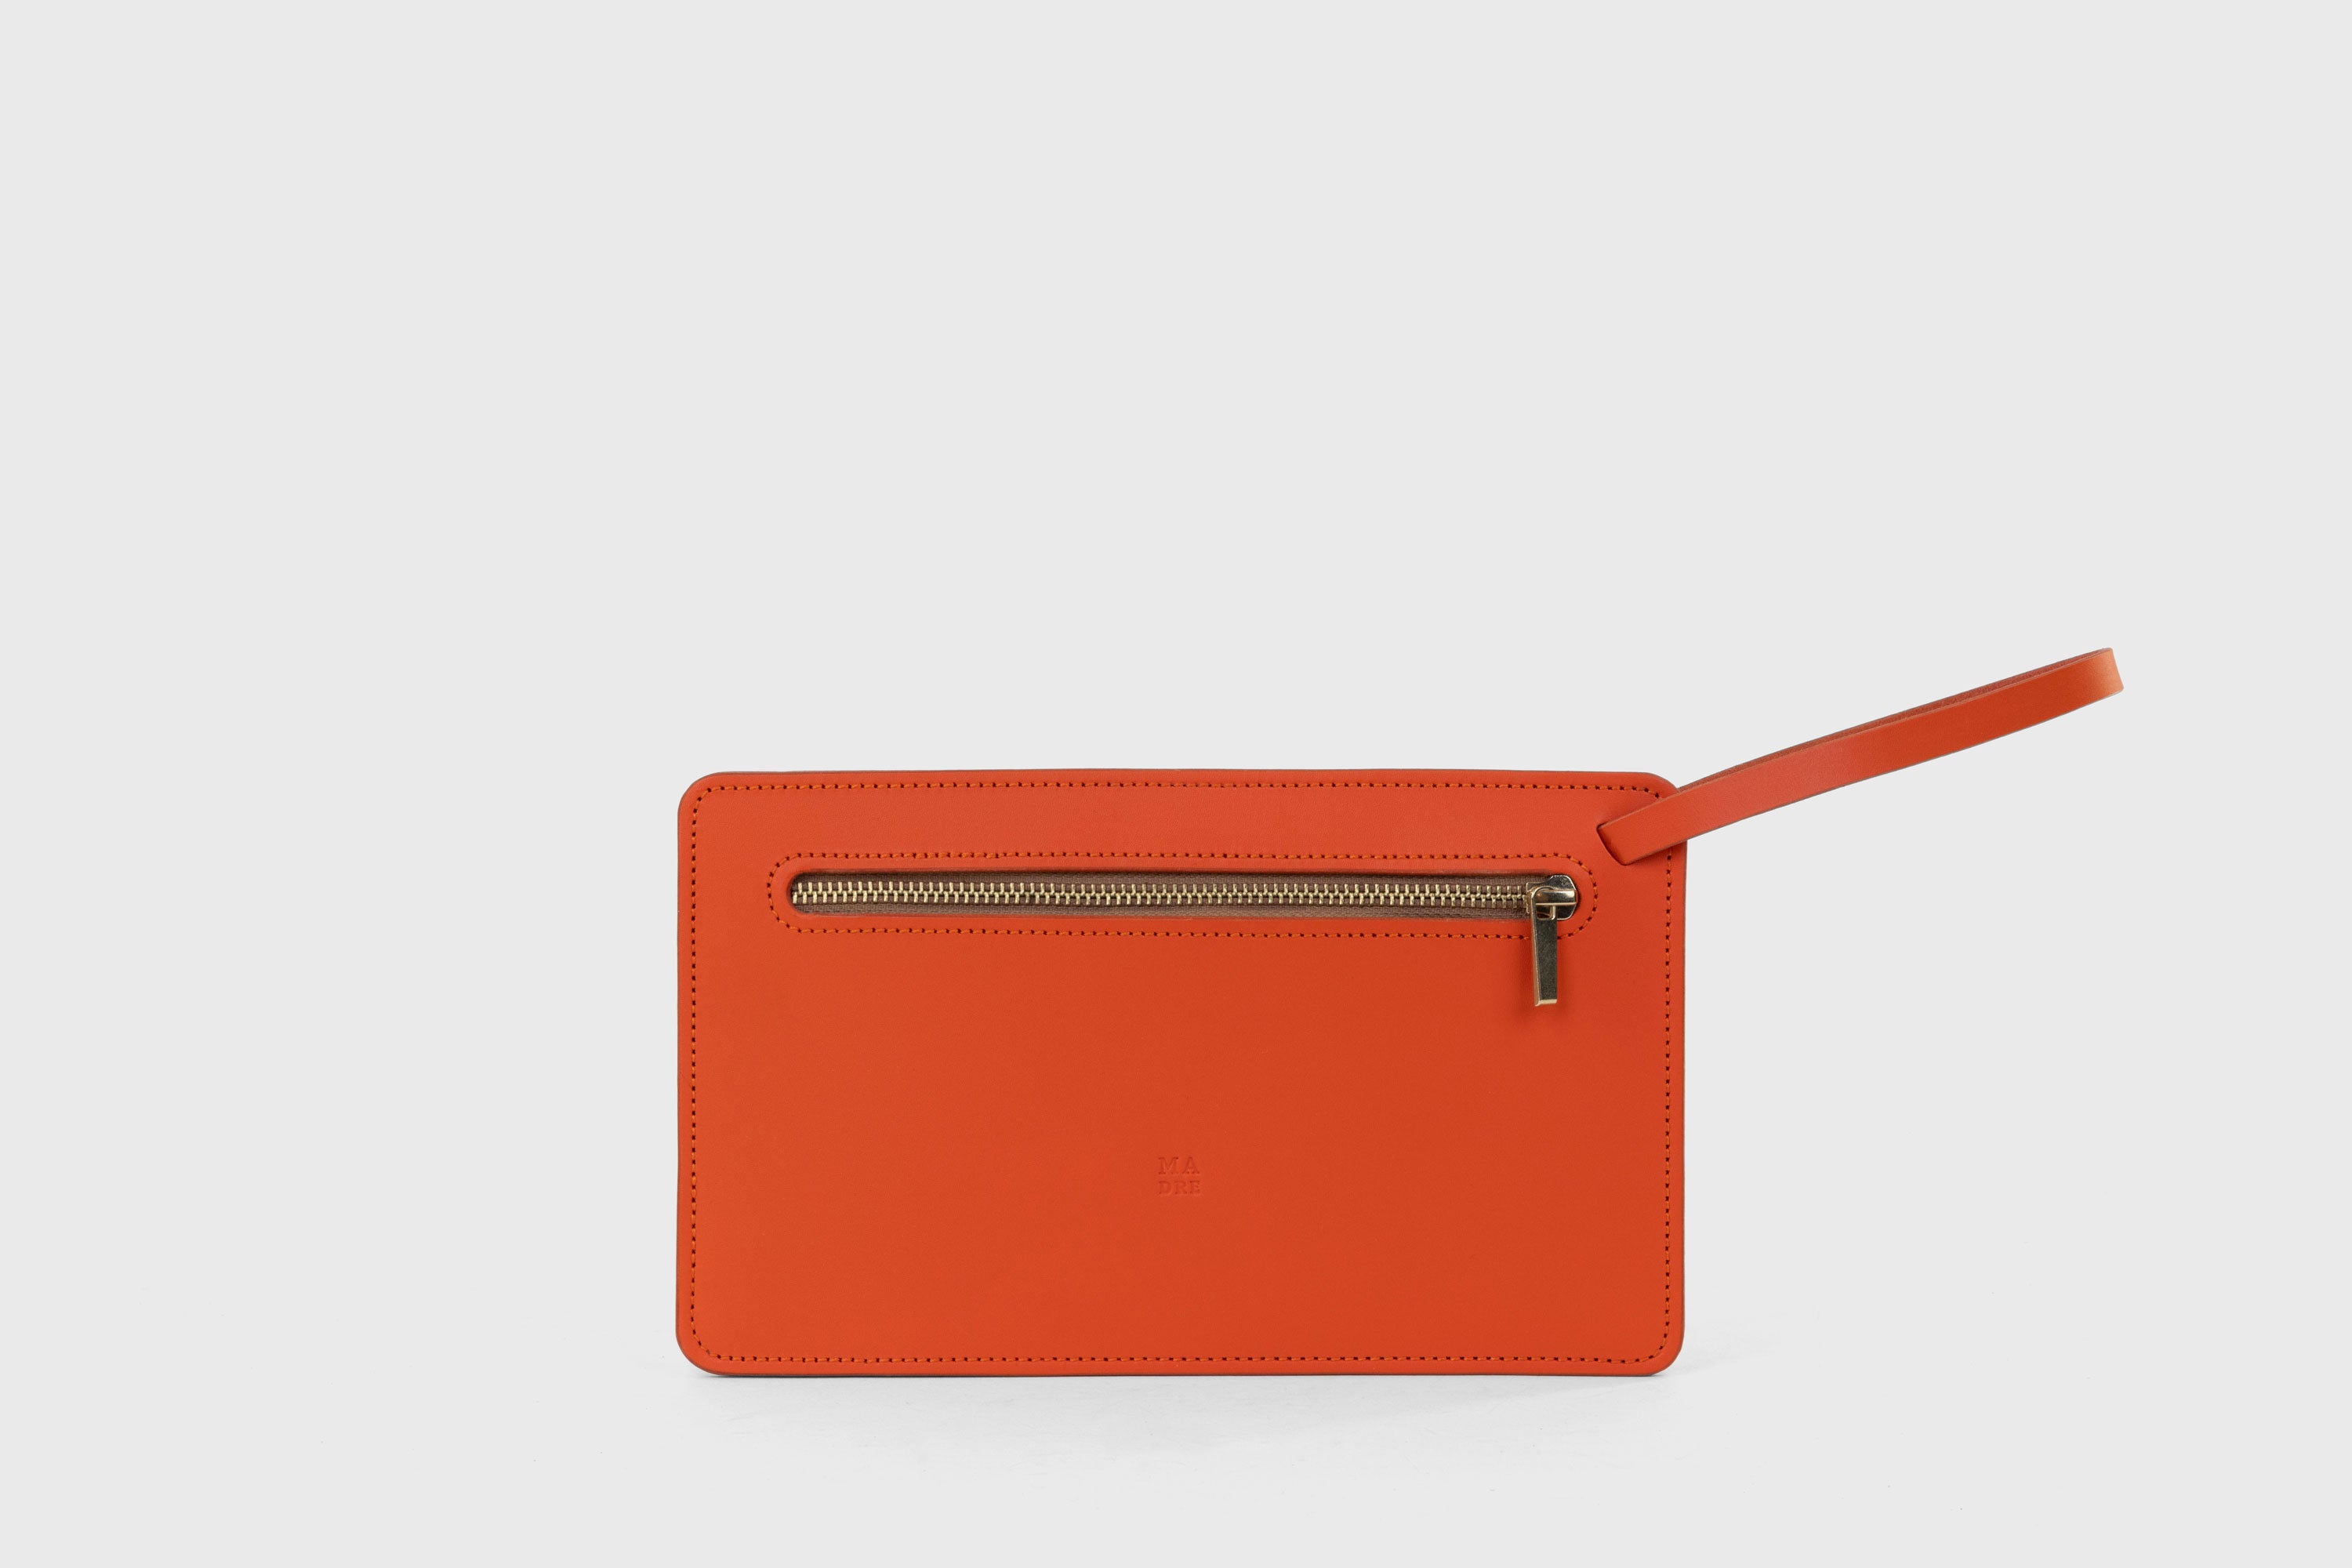 Clutch Flat Leather Orange Bag Slim Wrist Band Zipper Minimalistic Premium Handmade Design Atelier Madre Manuel Dreesmann Barcelona Spain